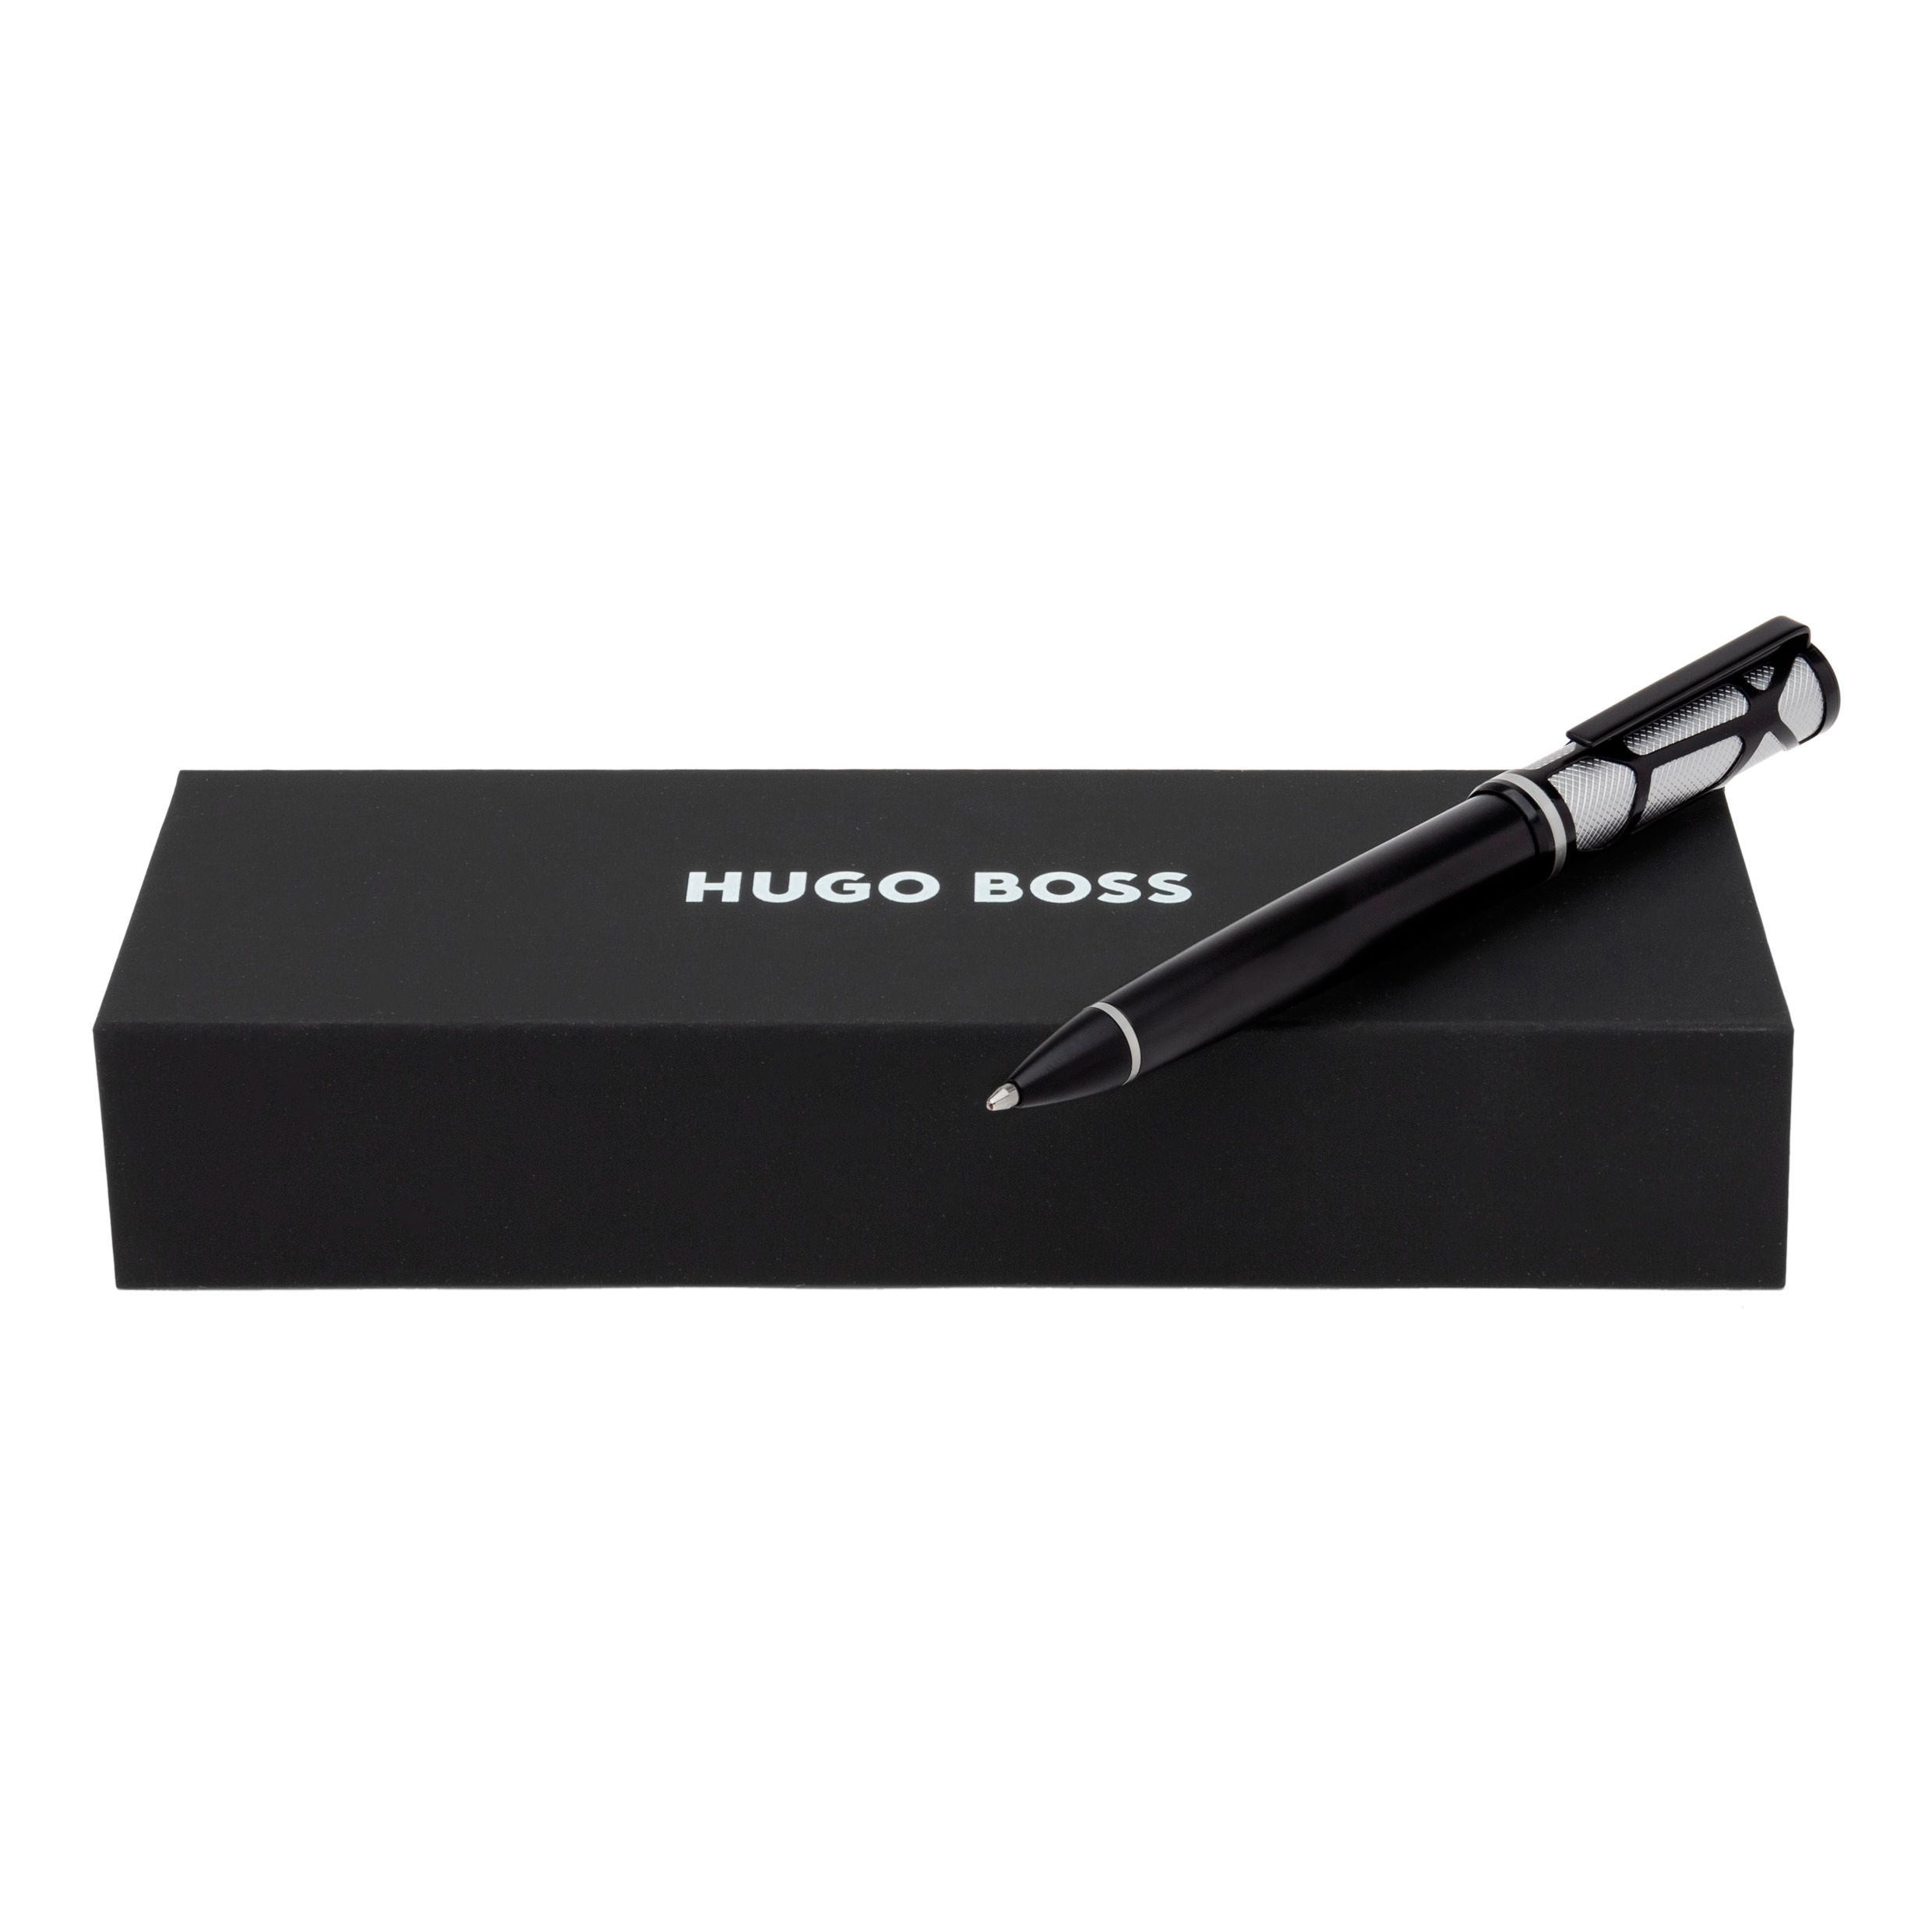 Hugo Boss Craft Chrome Ball Pen